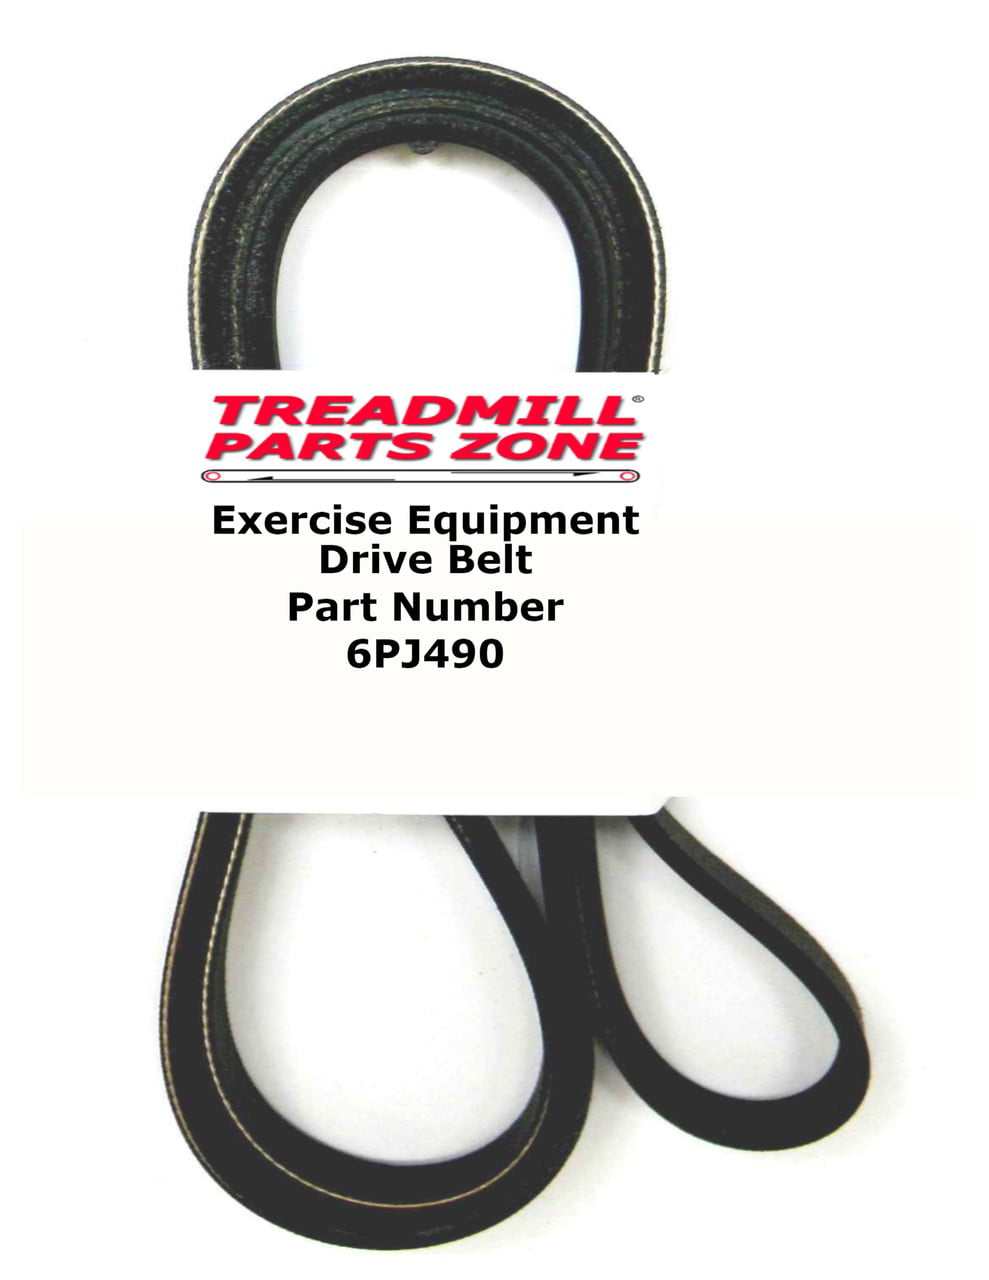 270J Fitness machines,Exercise bikes,tools Belt 6PJ686 686pj6,6pj686 